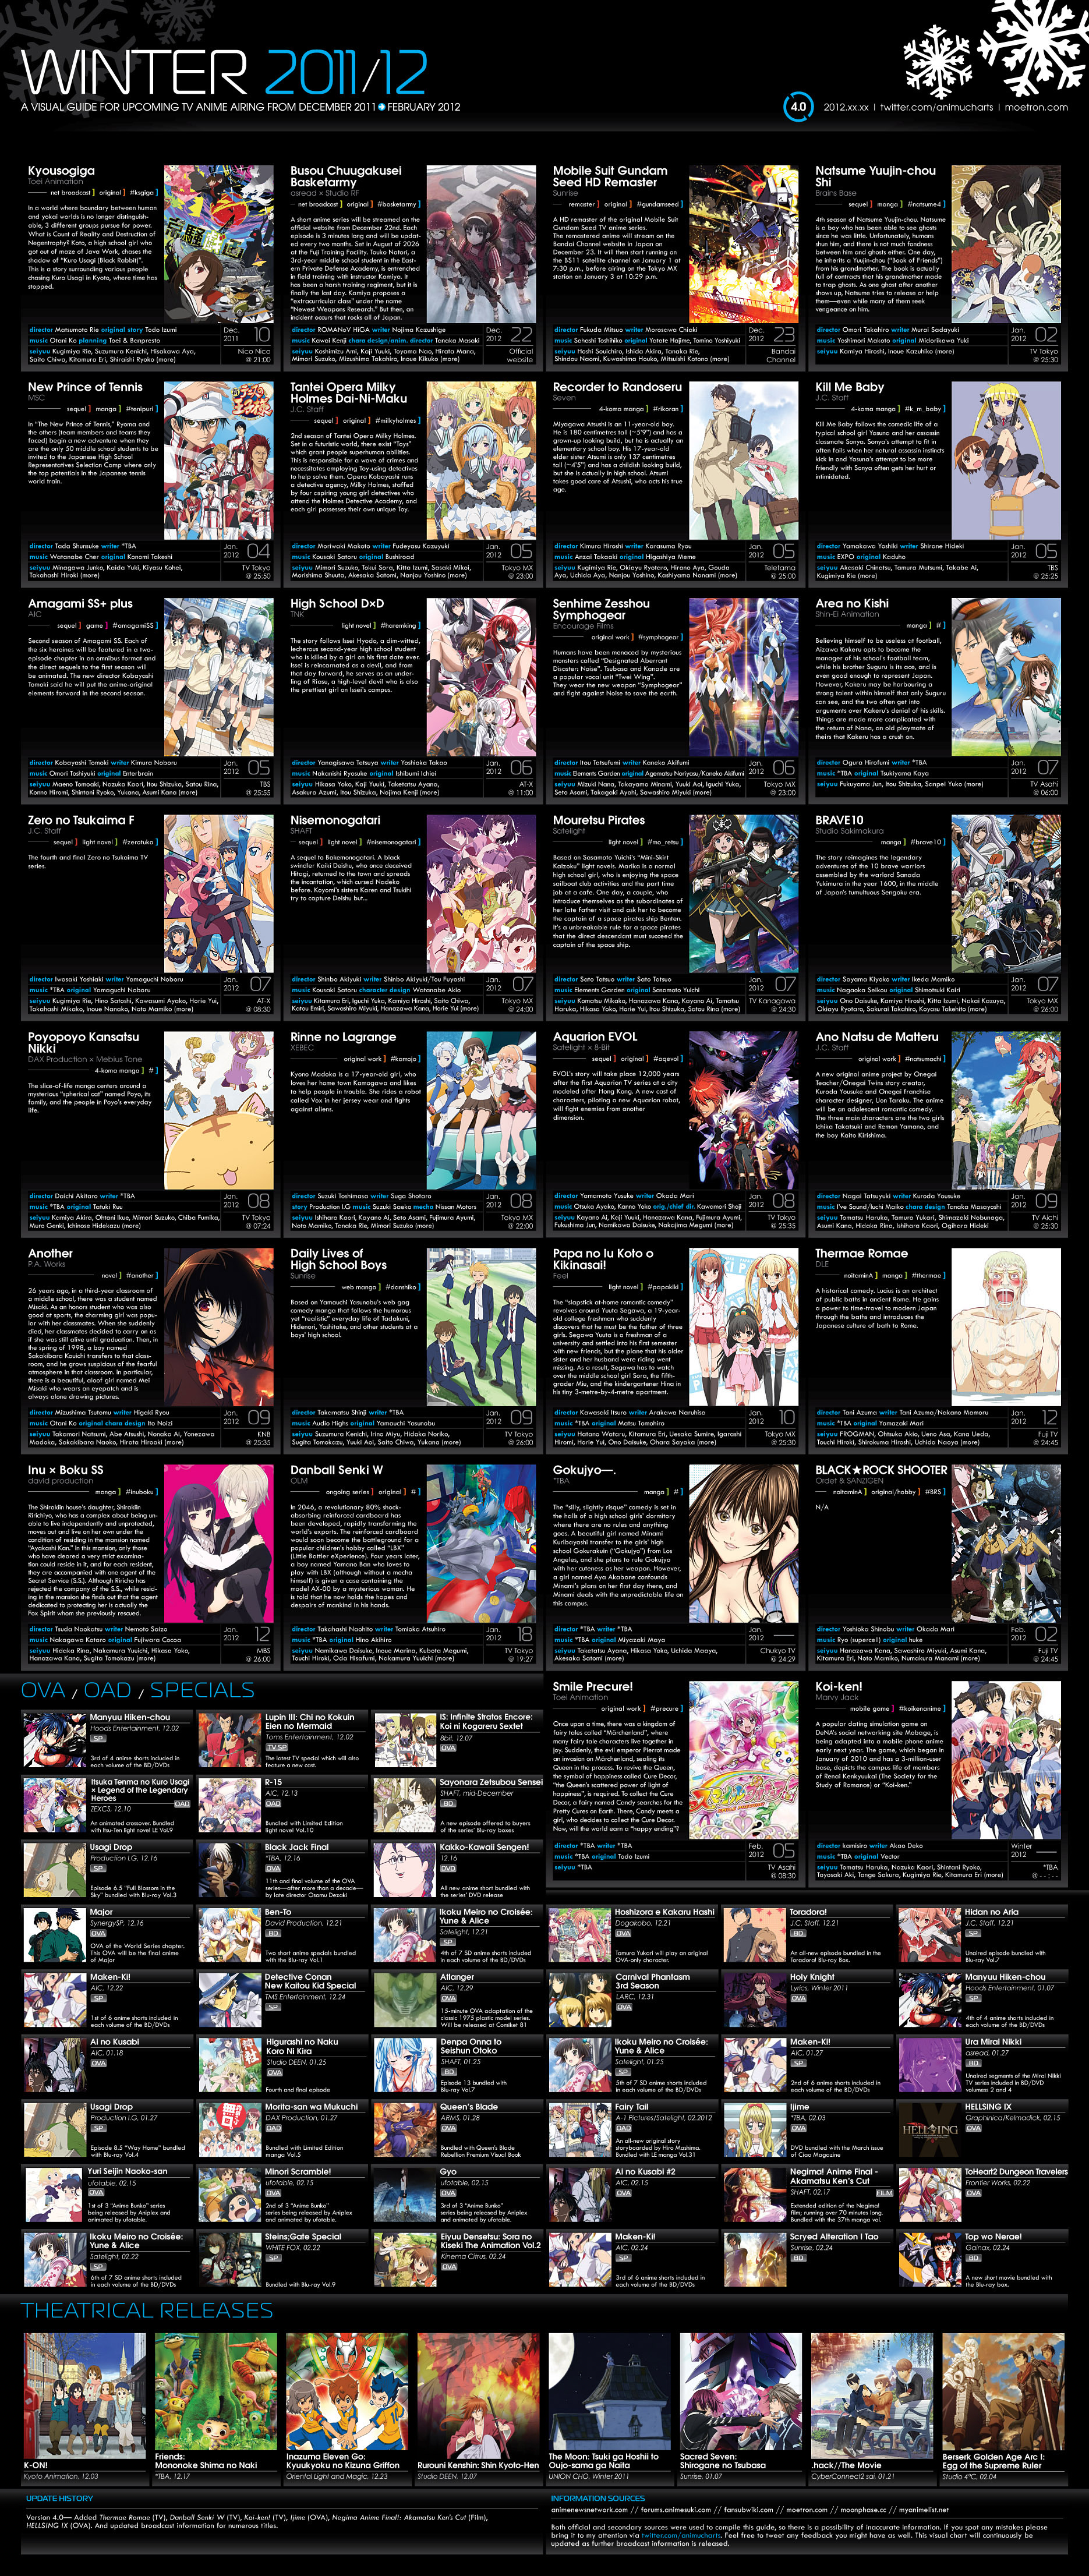 Spring 2018 Anime Chart